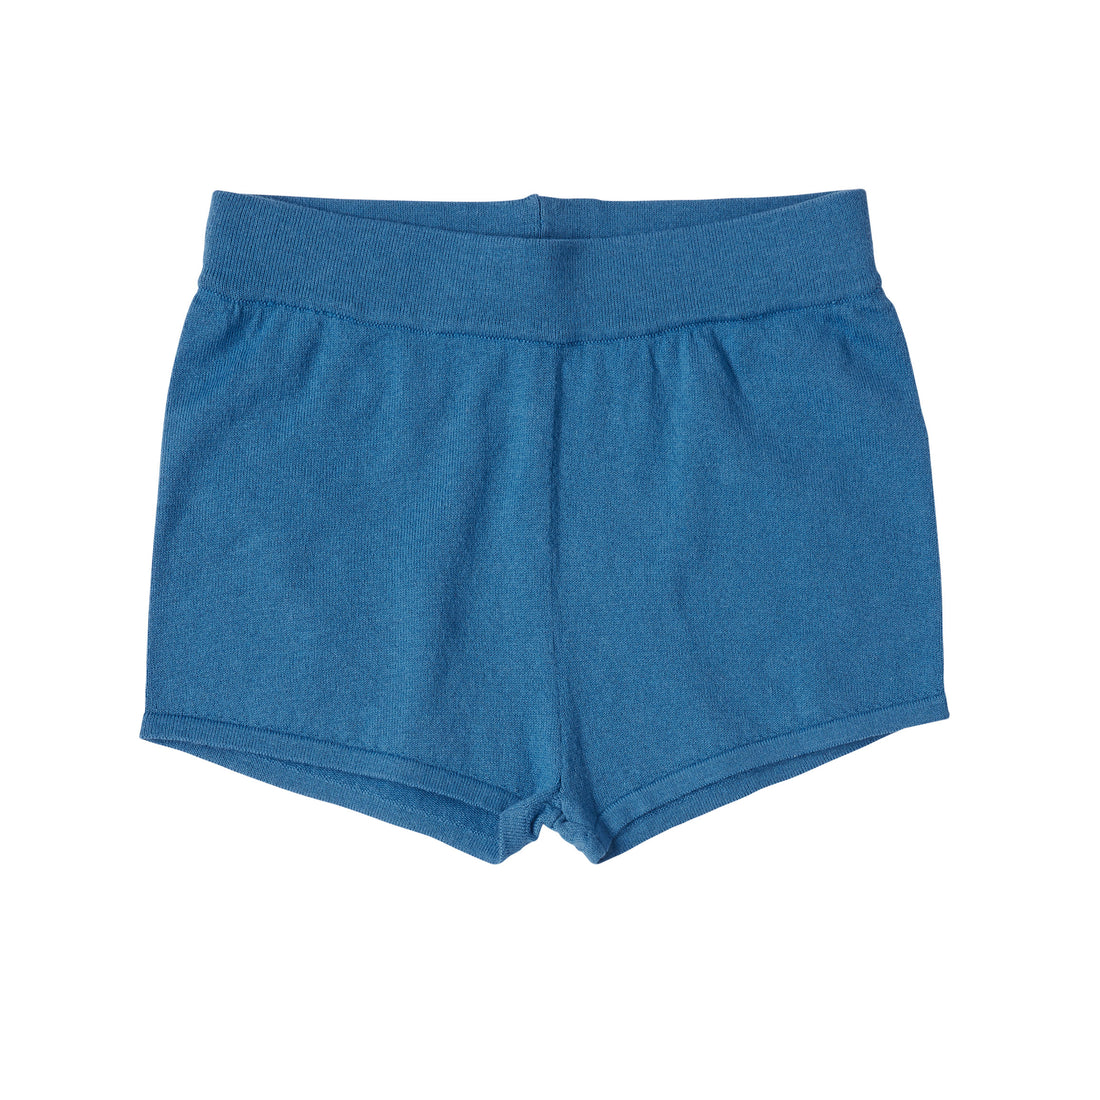 FUB Azure Beach Shorts